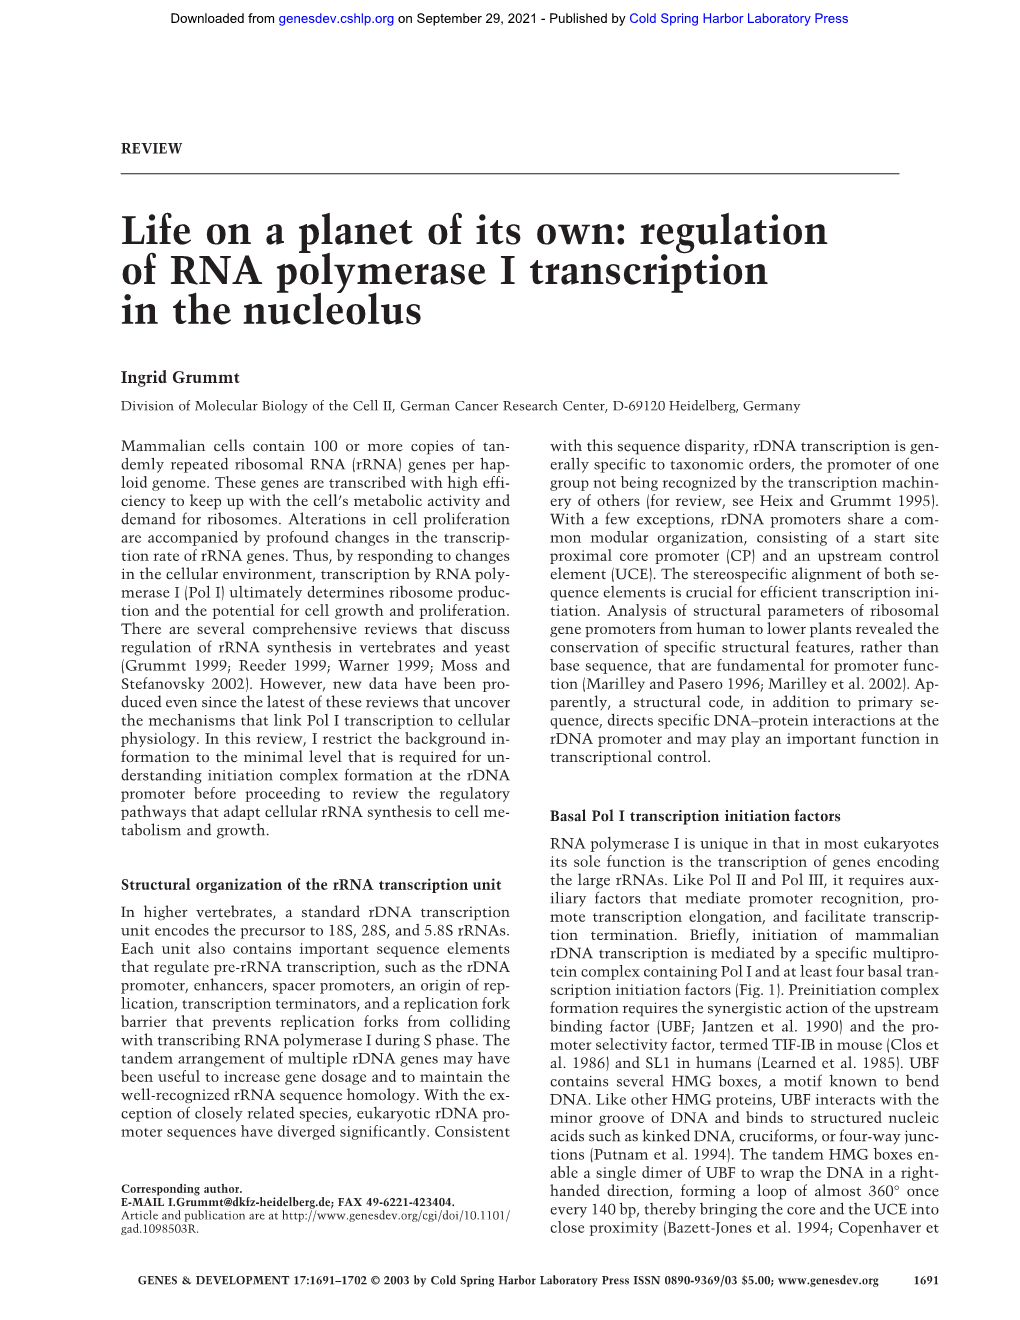 Regulation of RNA Polymerase I Transcription in the Nucleolus